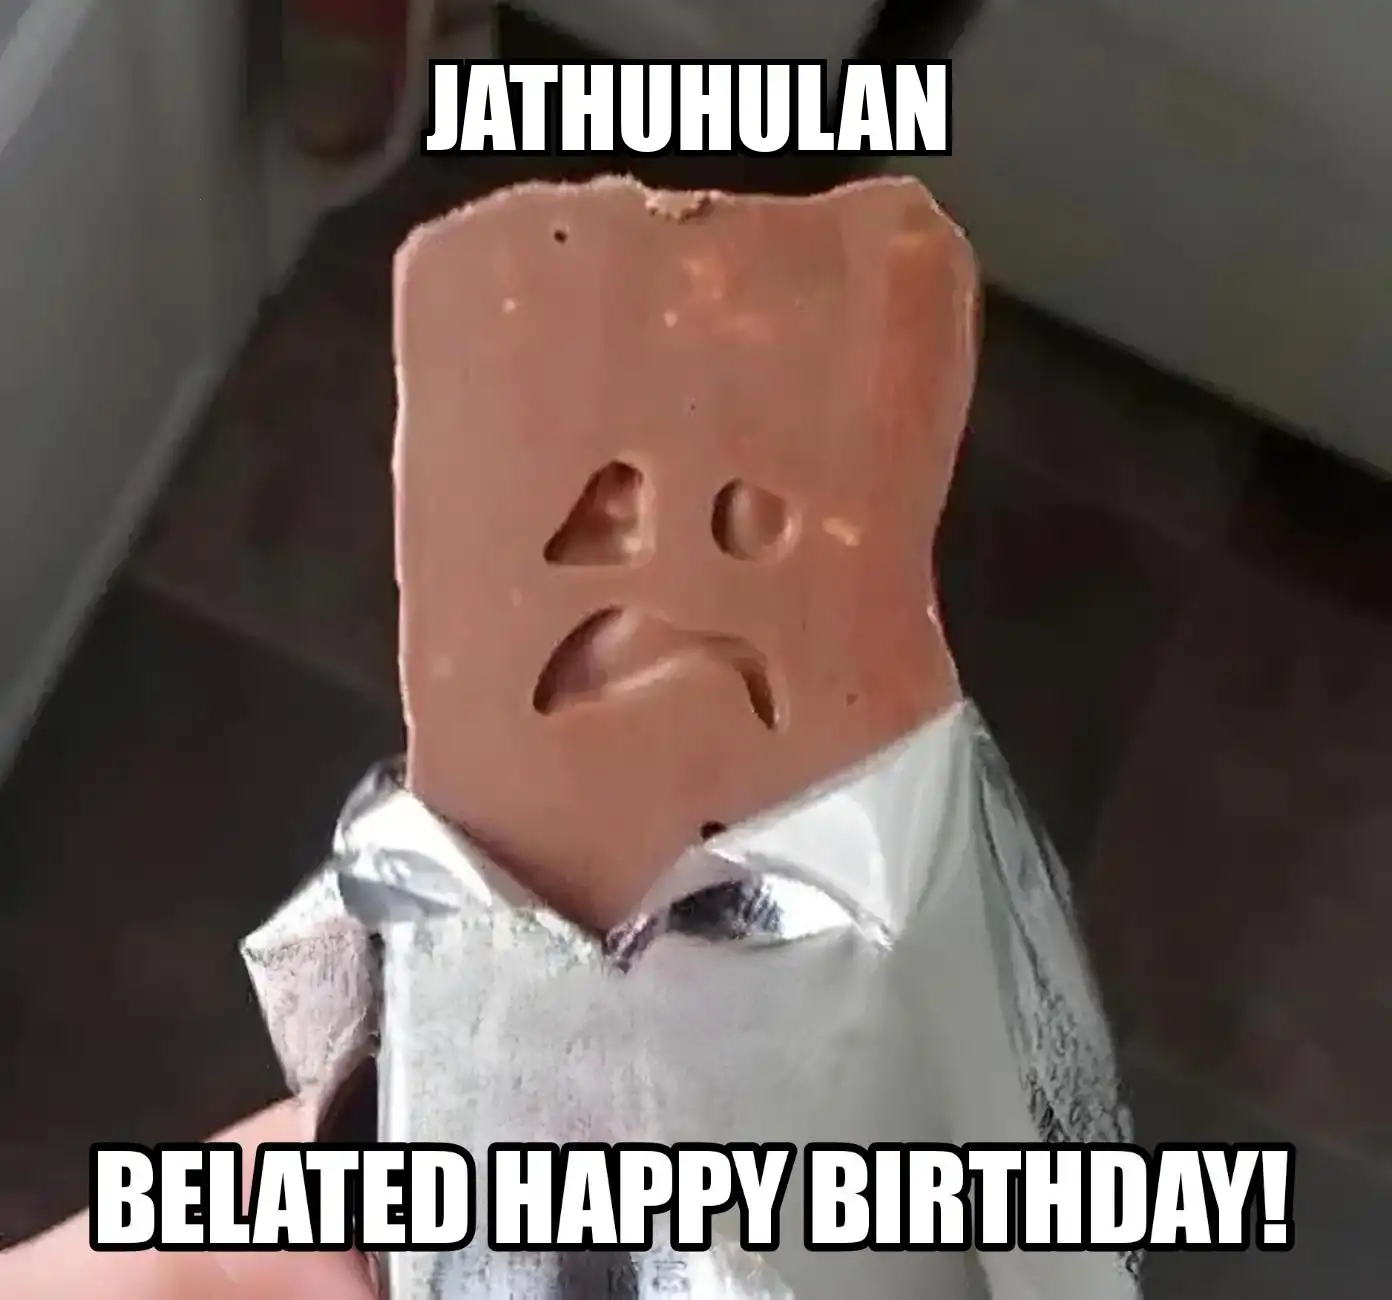 Happy Birthday Jathuhulan Belated Happy Birthday Meme